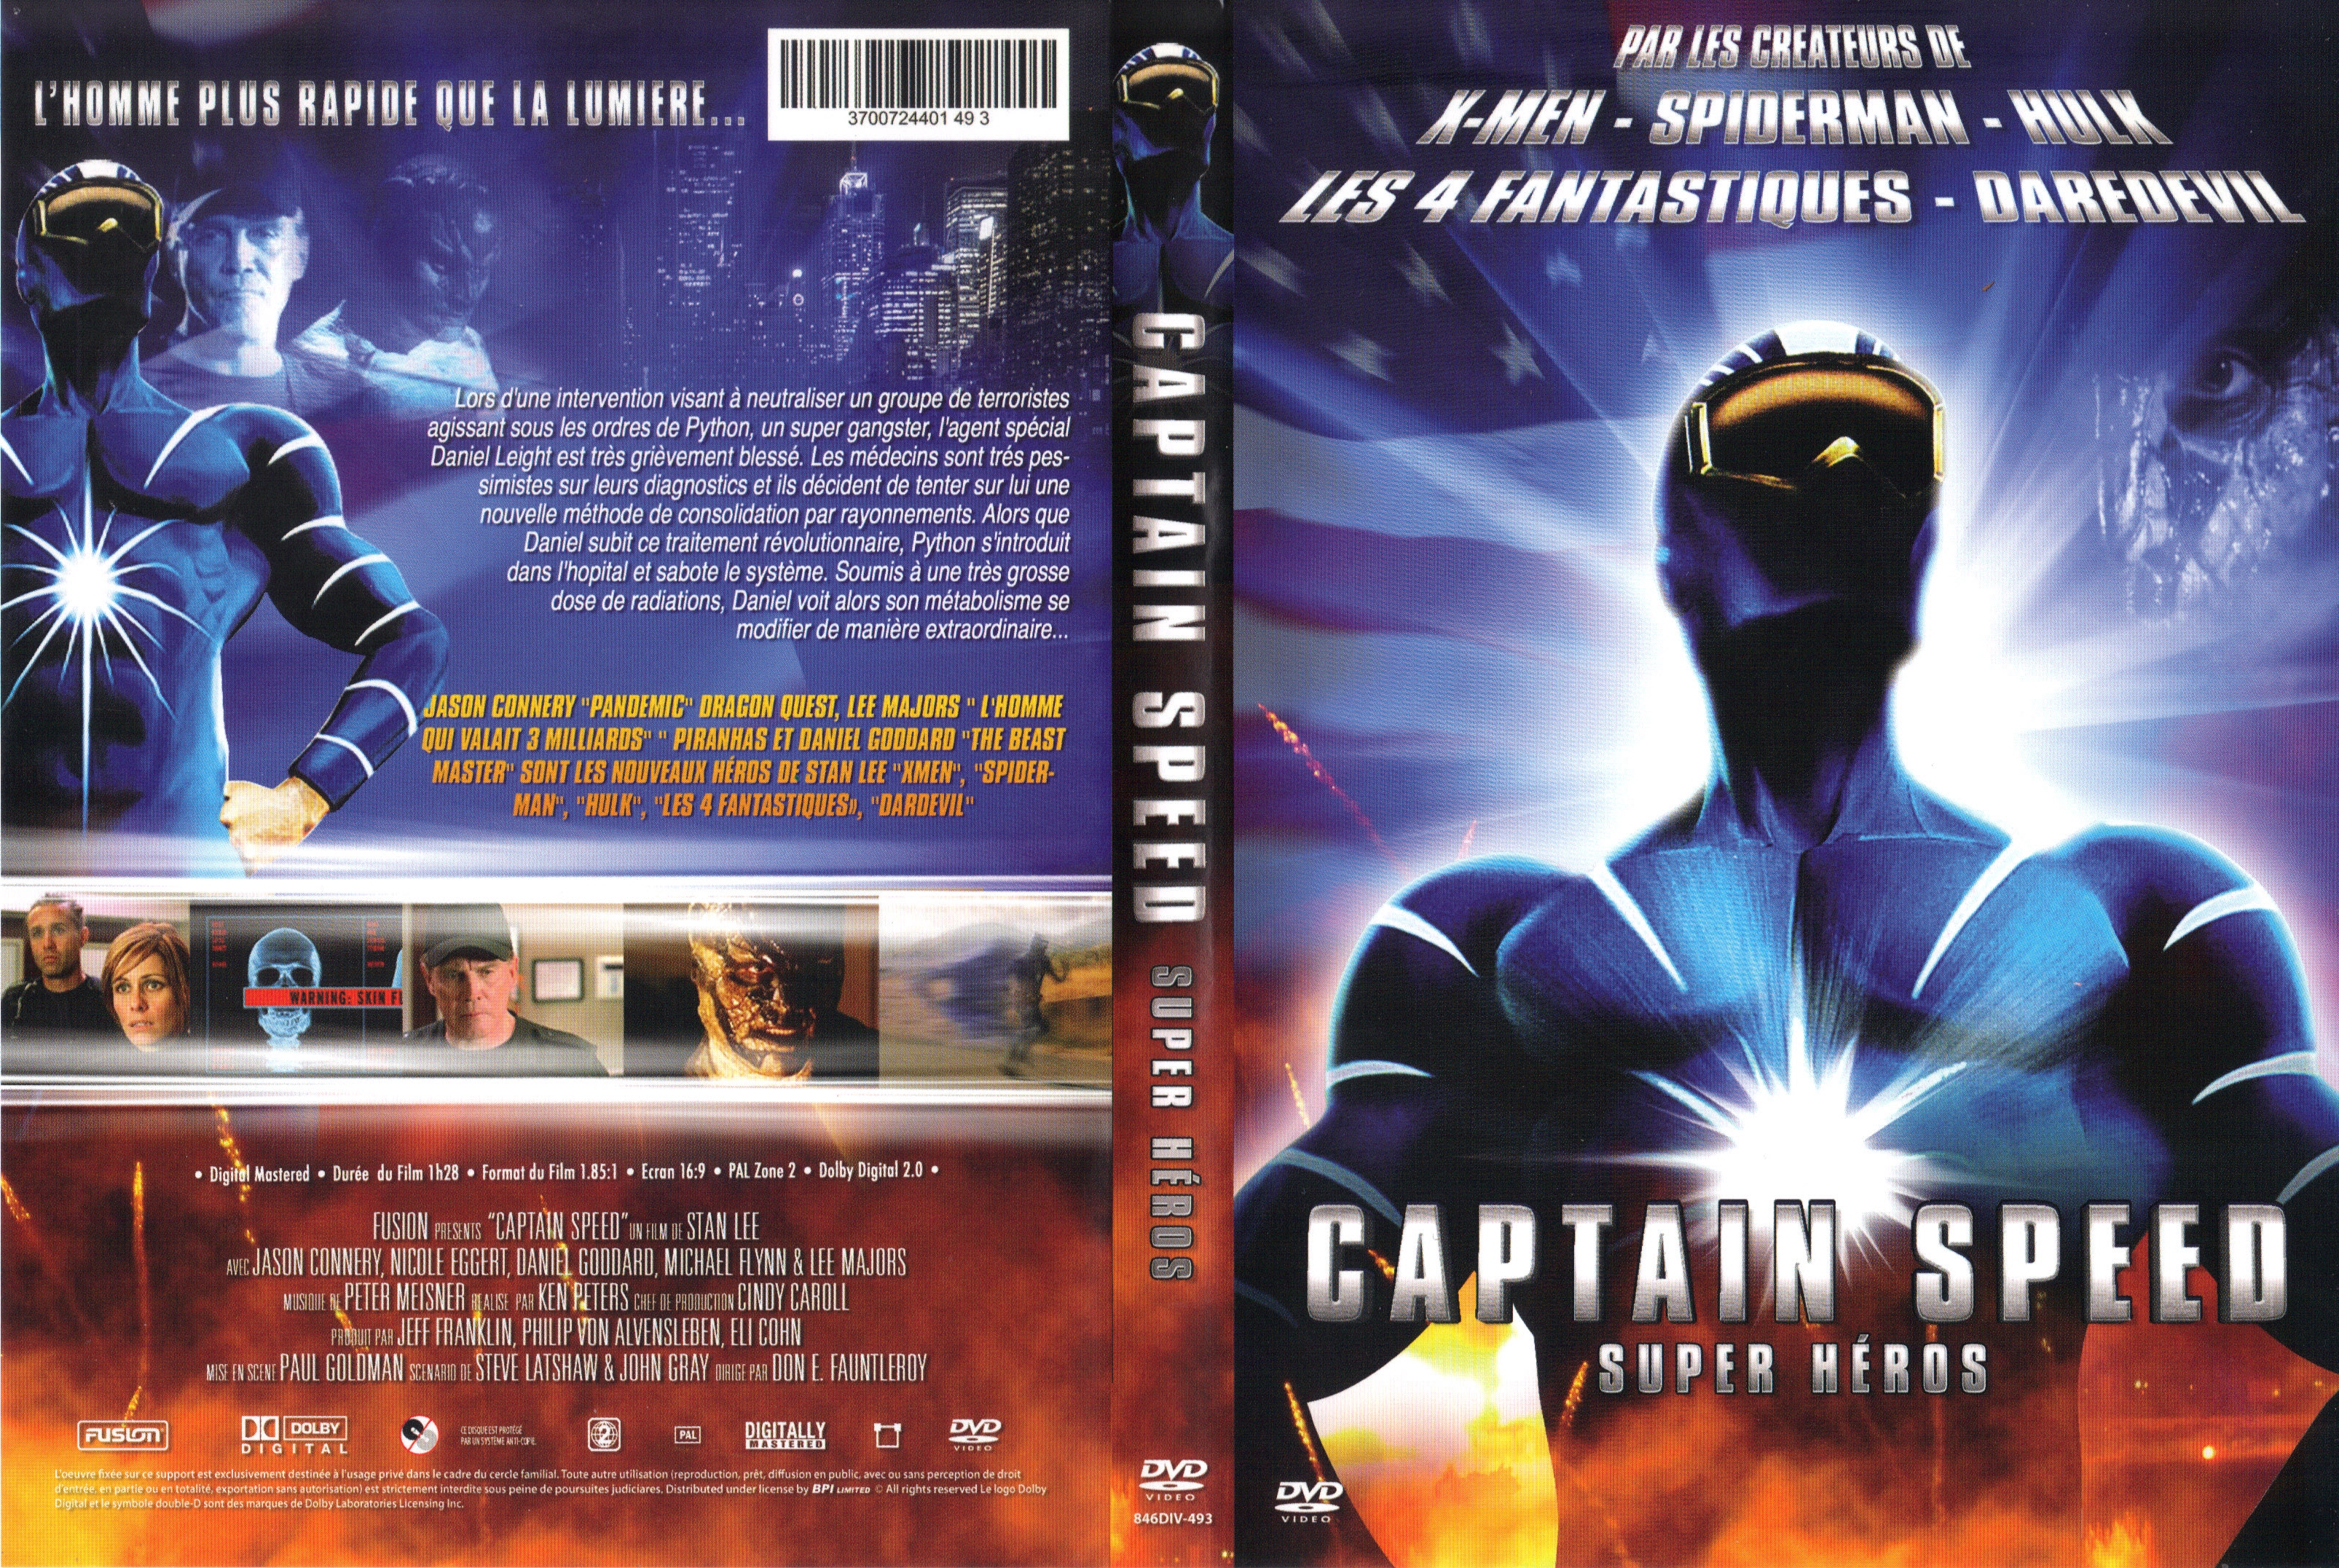 Jaquette DVD Captain speed